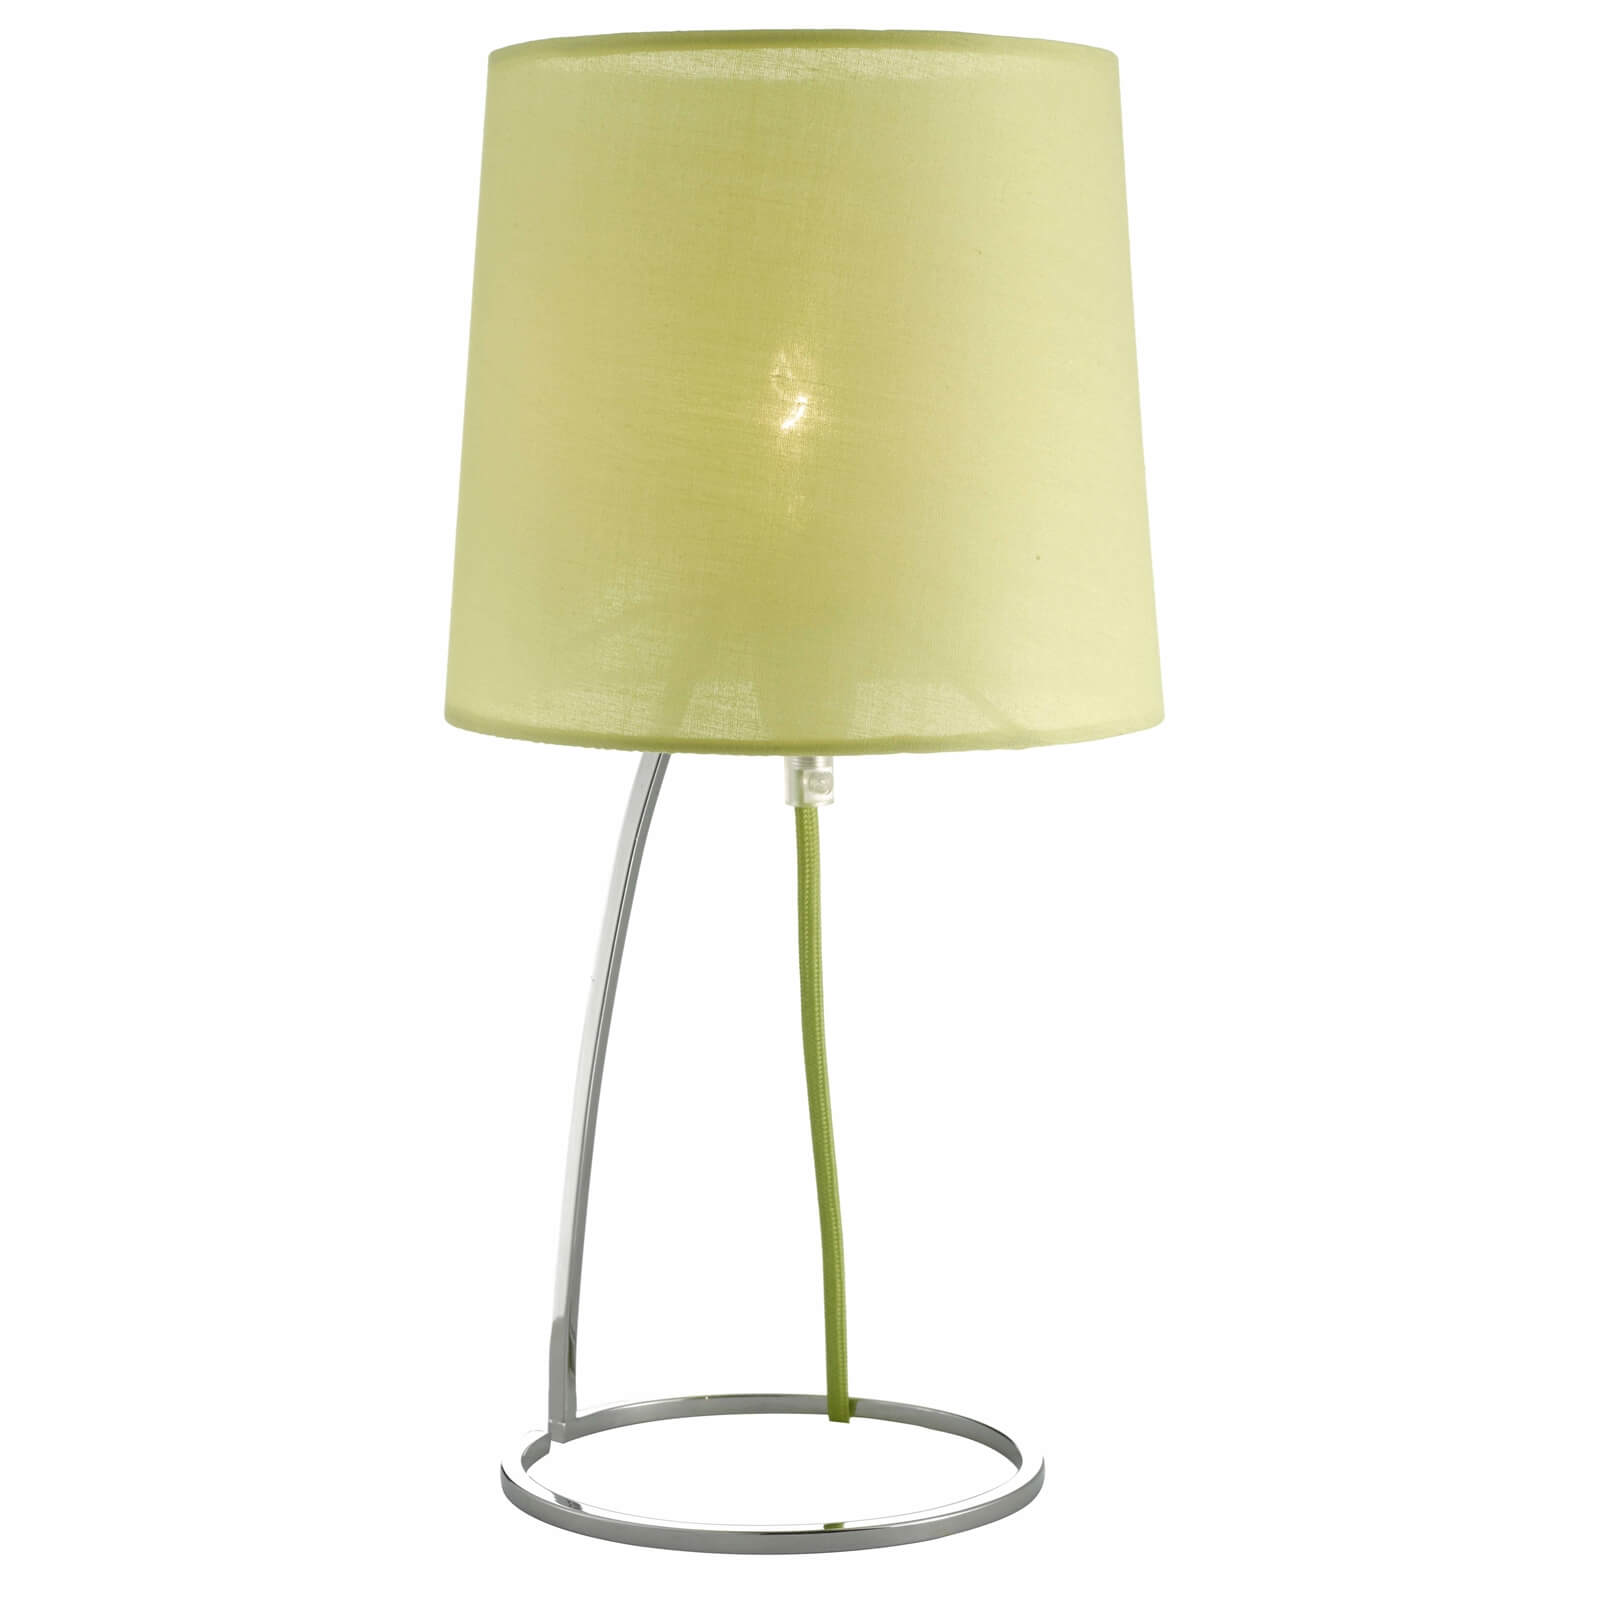 Hoola Table Lamp - Lime Green